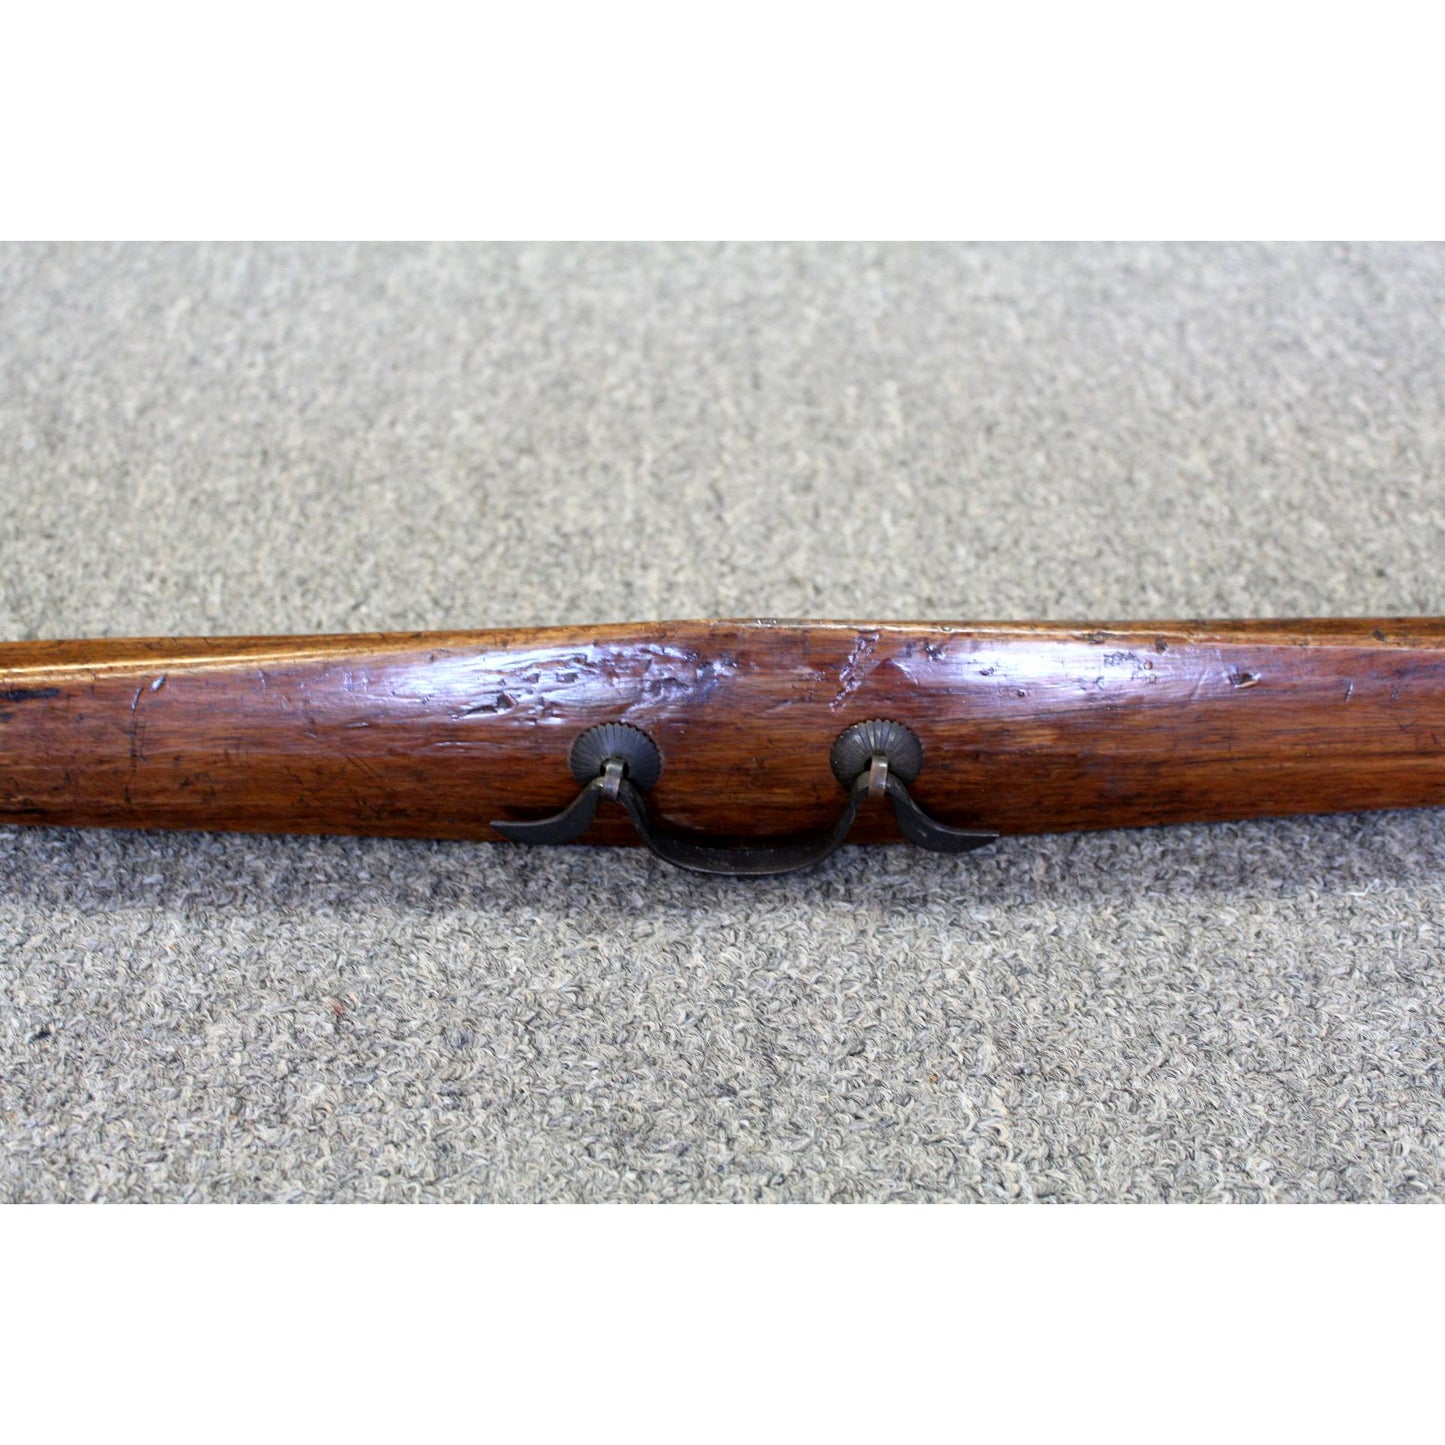 Wood Spear